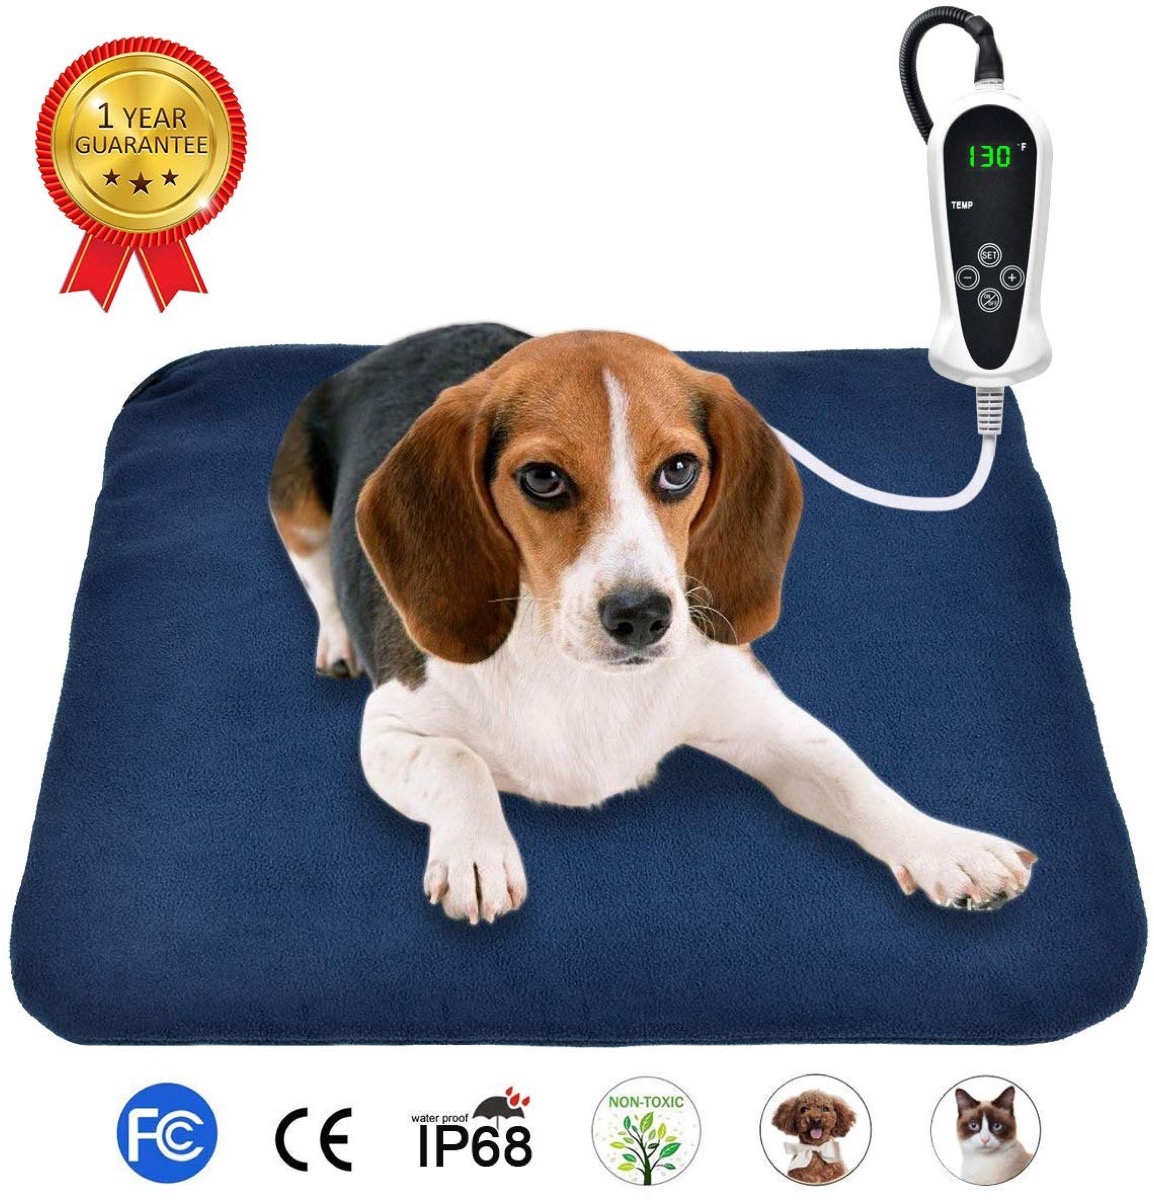 Beagle sitting on blue heating pad